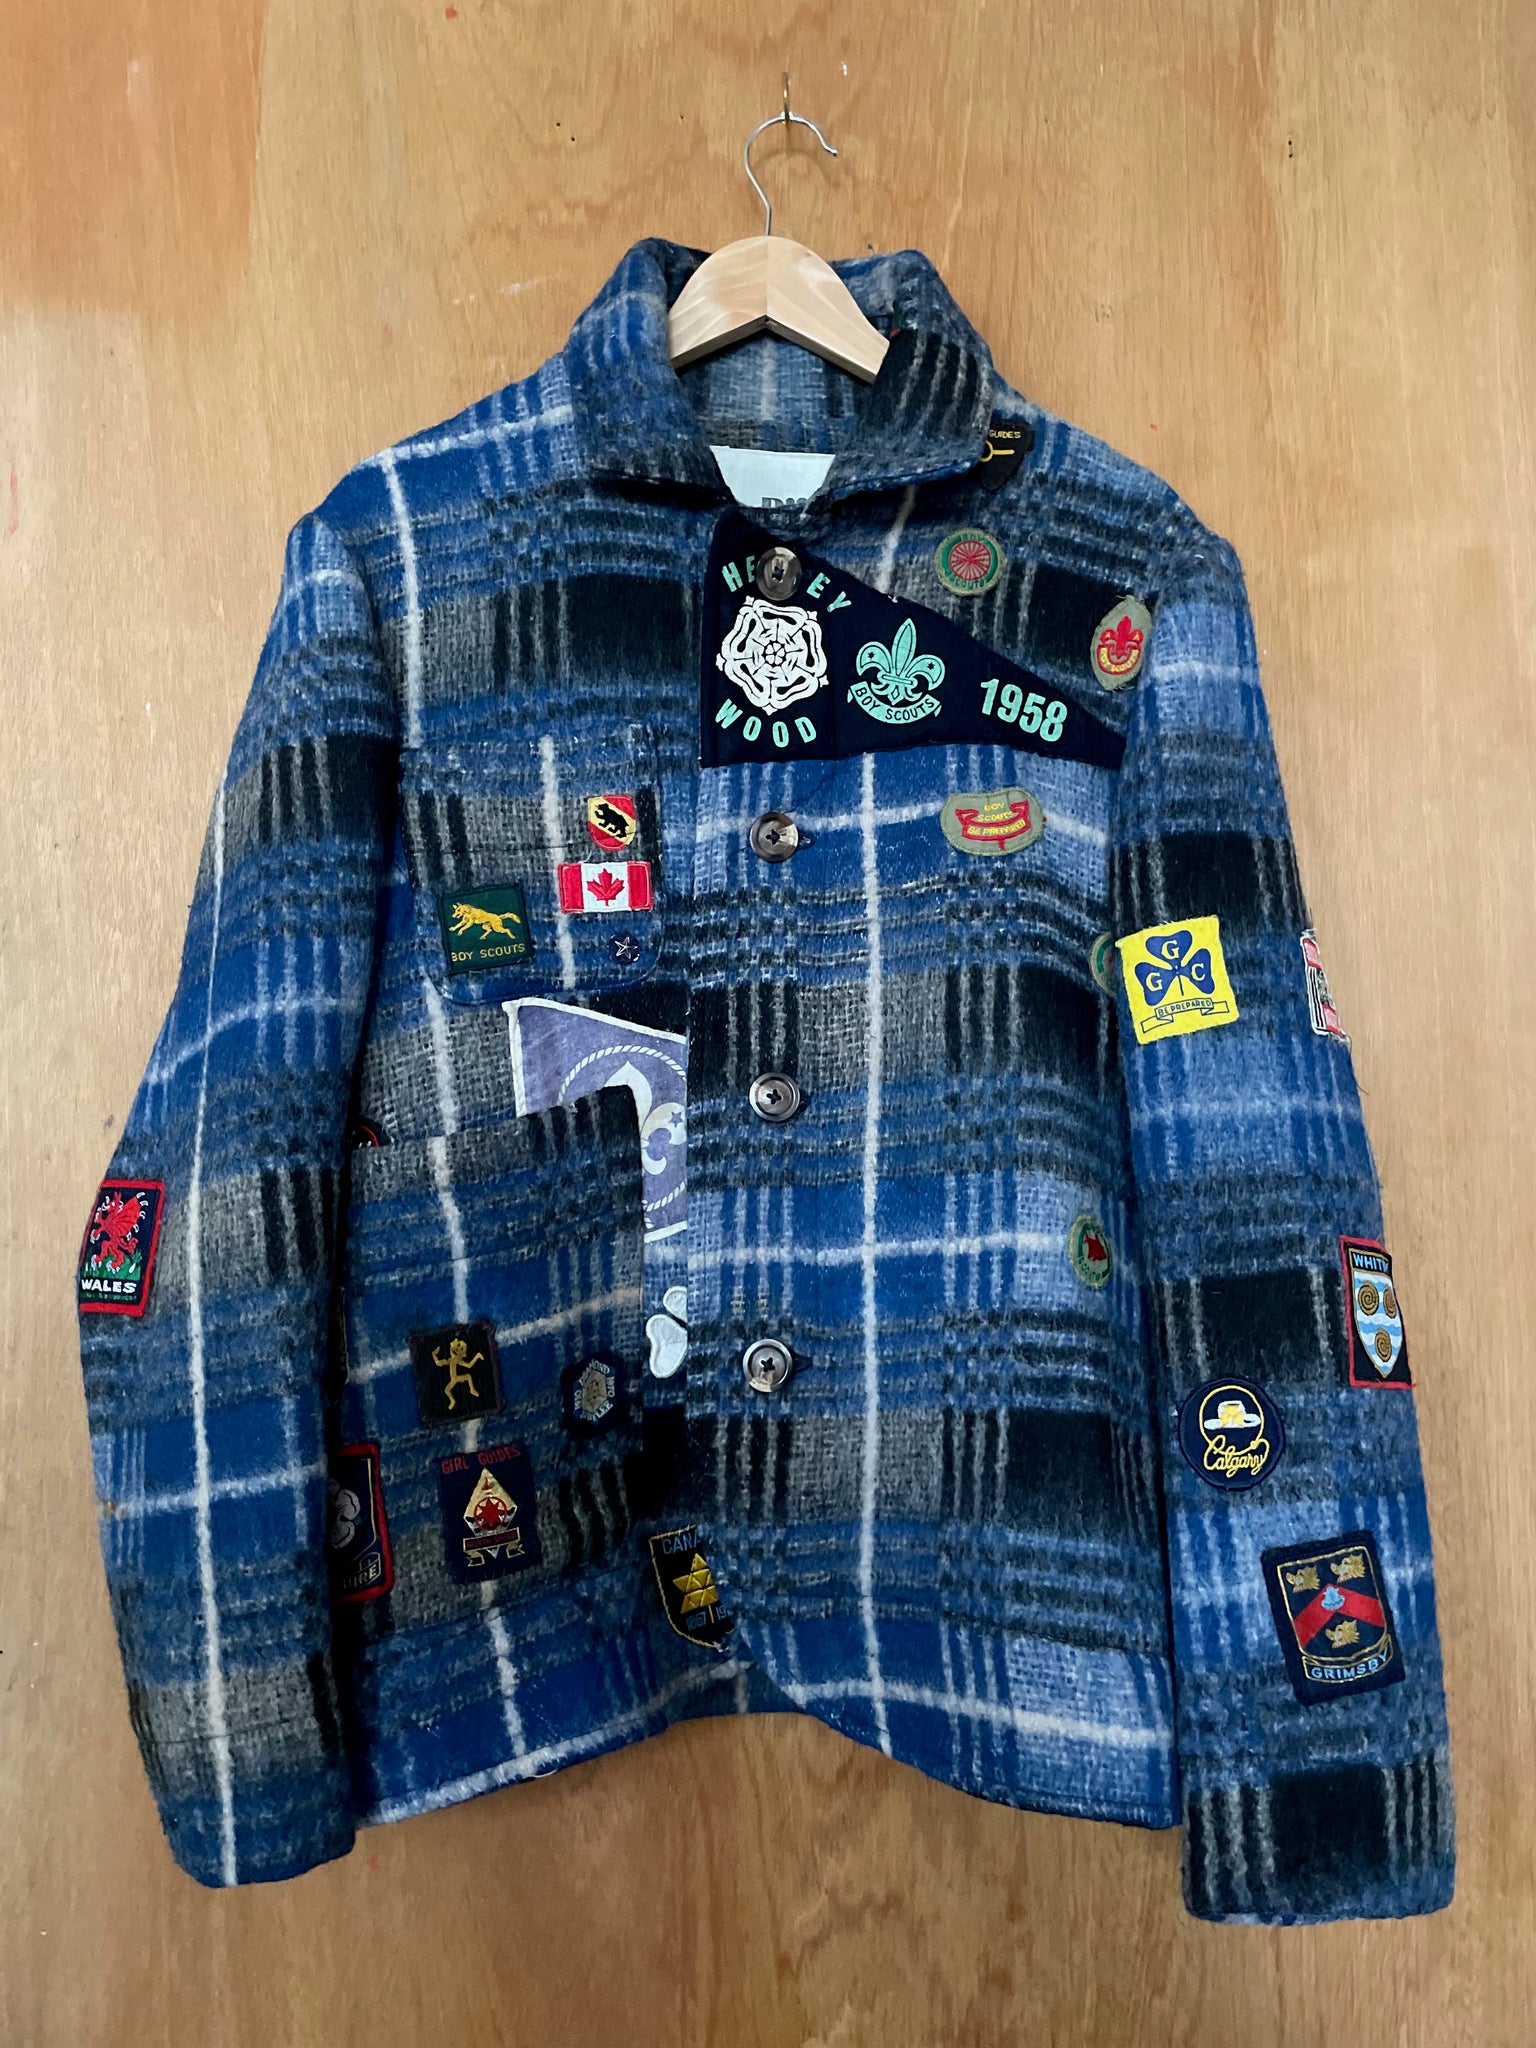 1. Scout Jacket